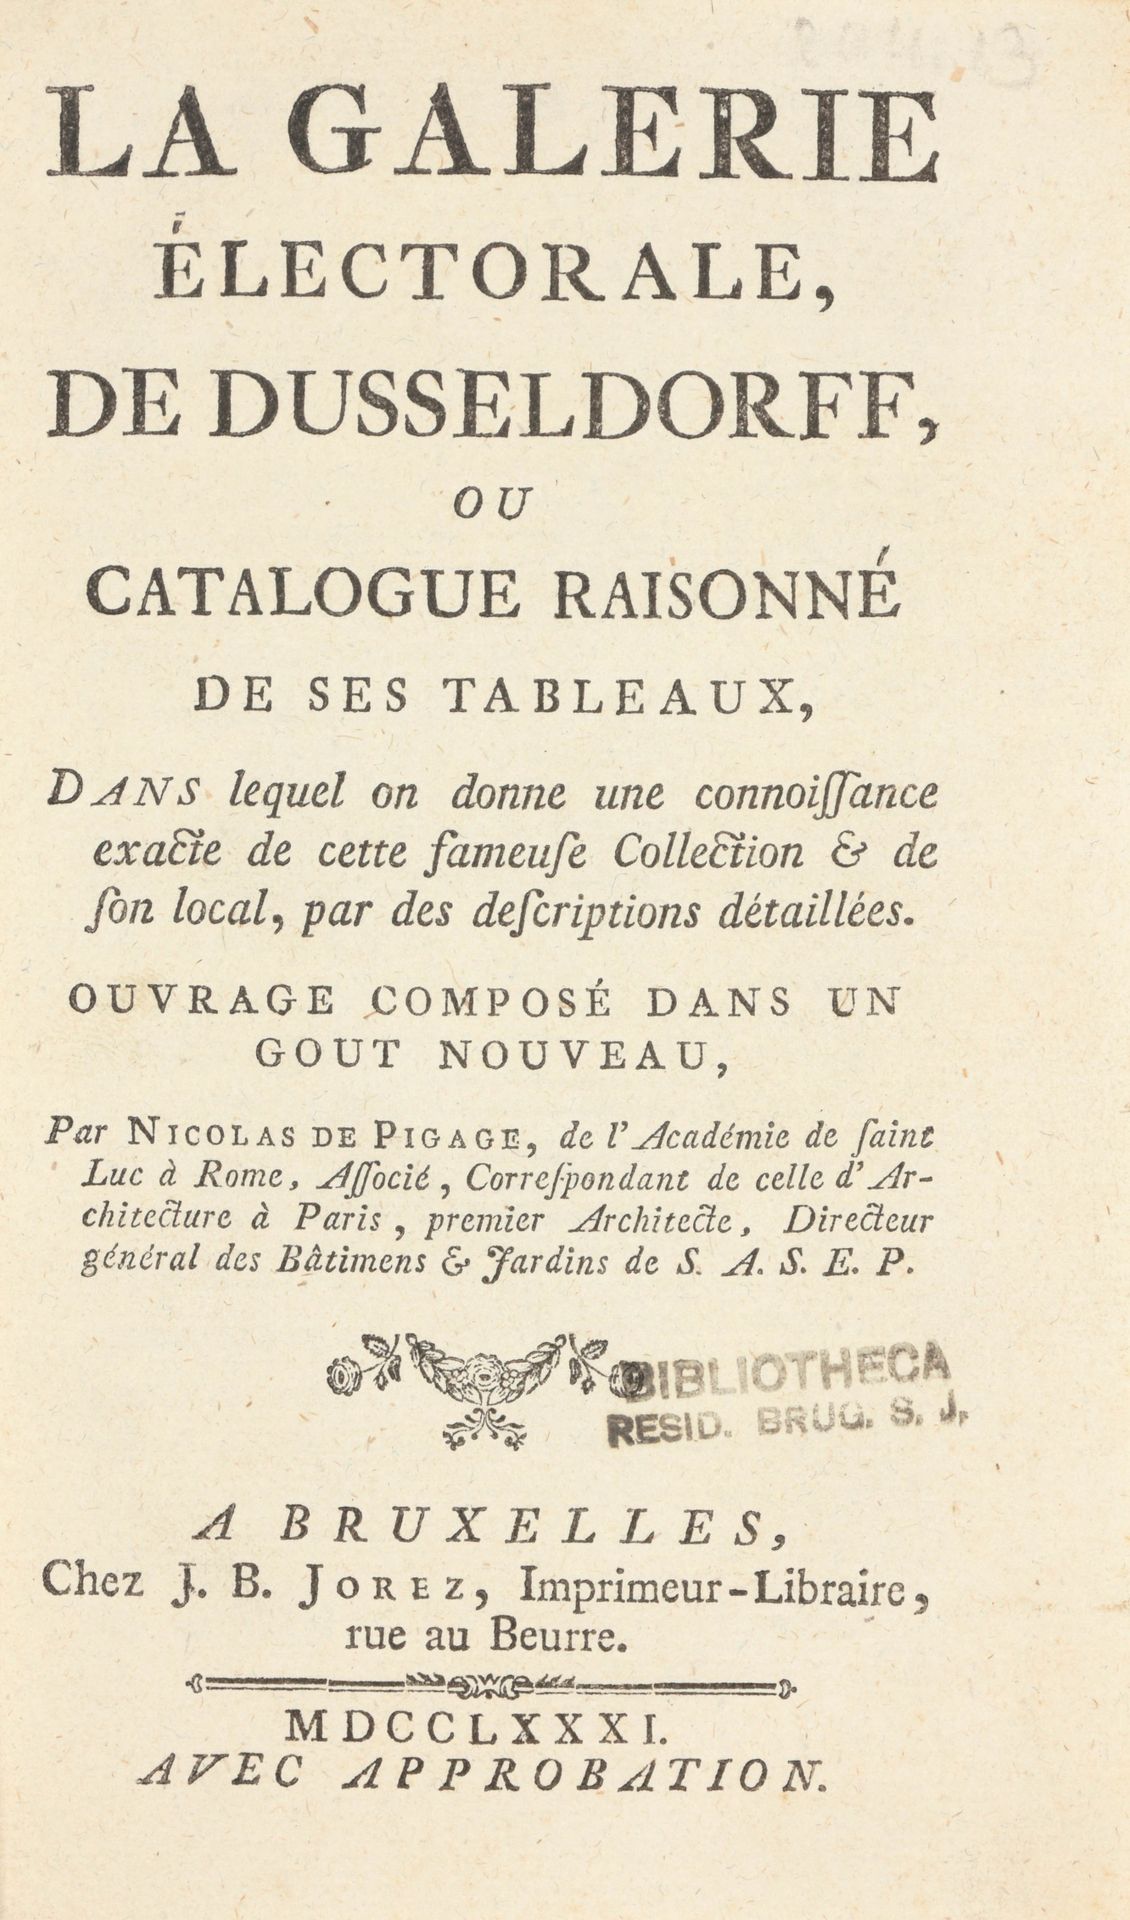 PIGAGE, Nicolas de 杜塞尔多夫的选举画廊，或他的绘画目录

8vo, [8], xij, 376页。扉页上有图书馆印章。19世纪半布装订

这&hellip;